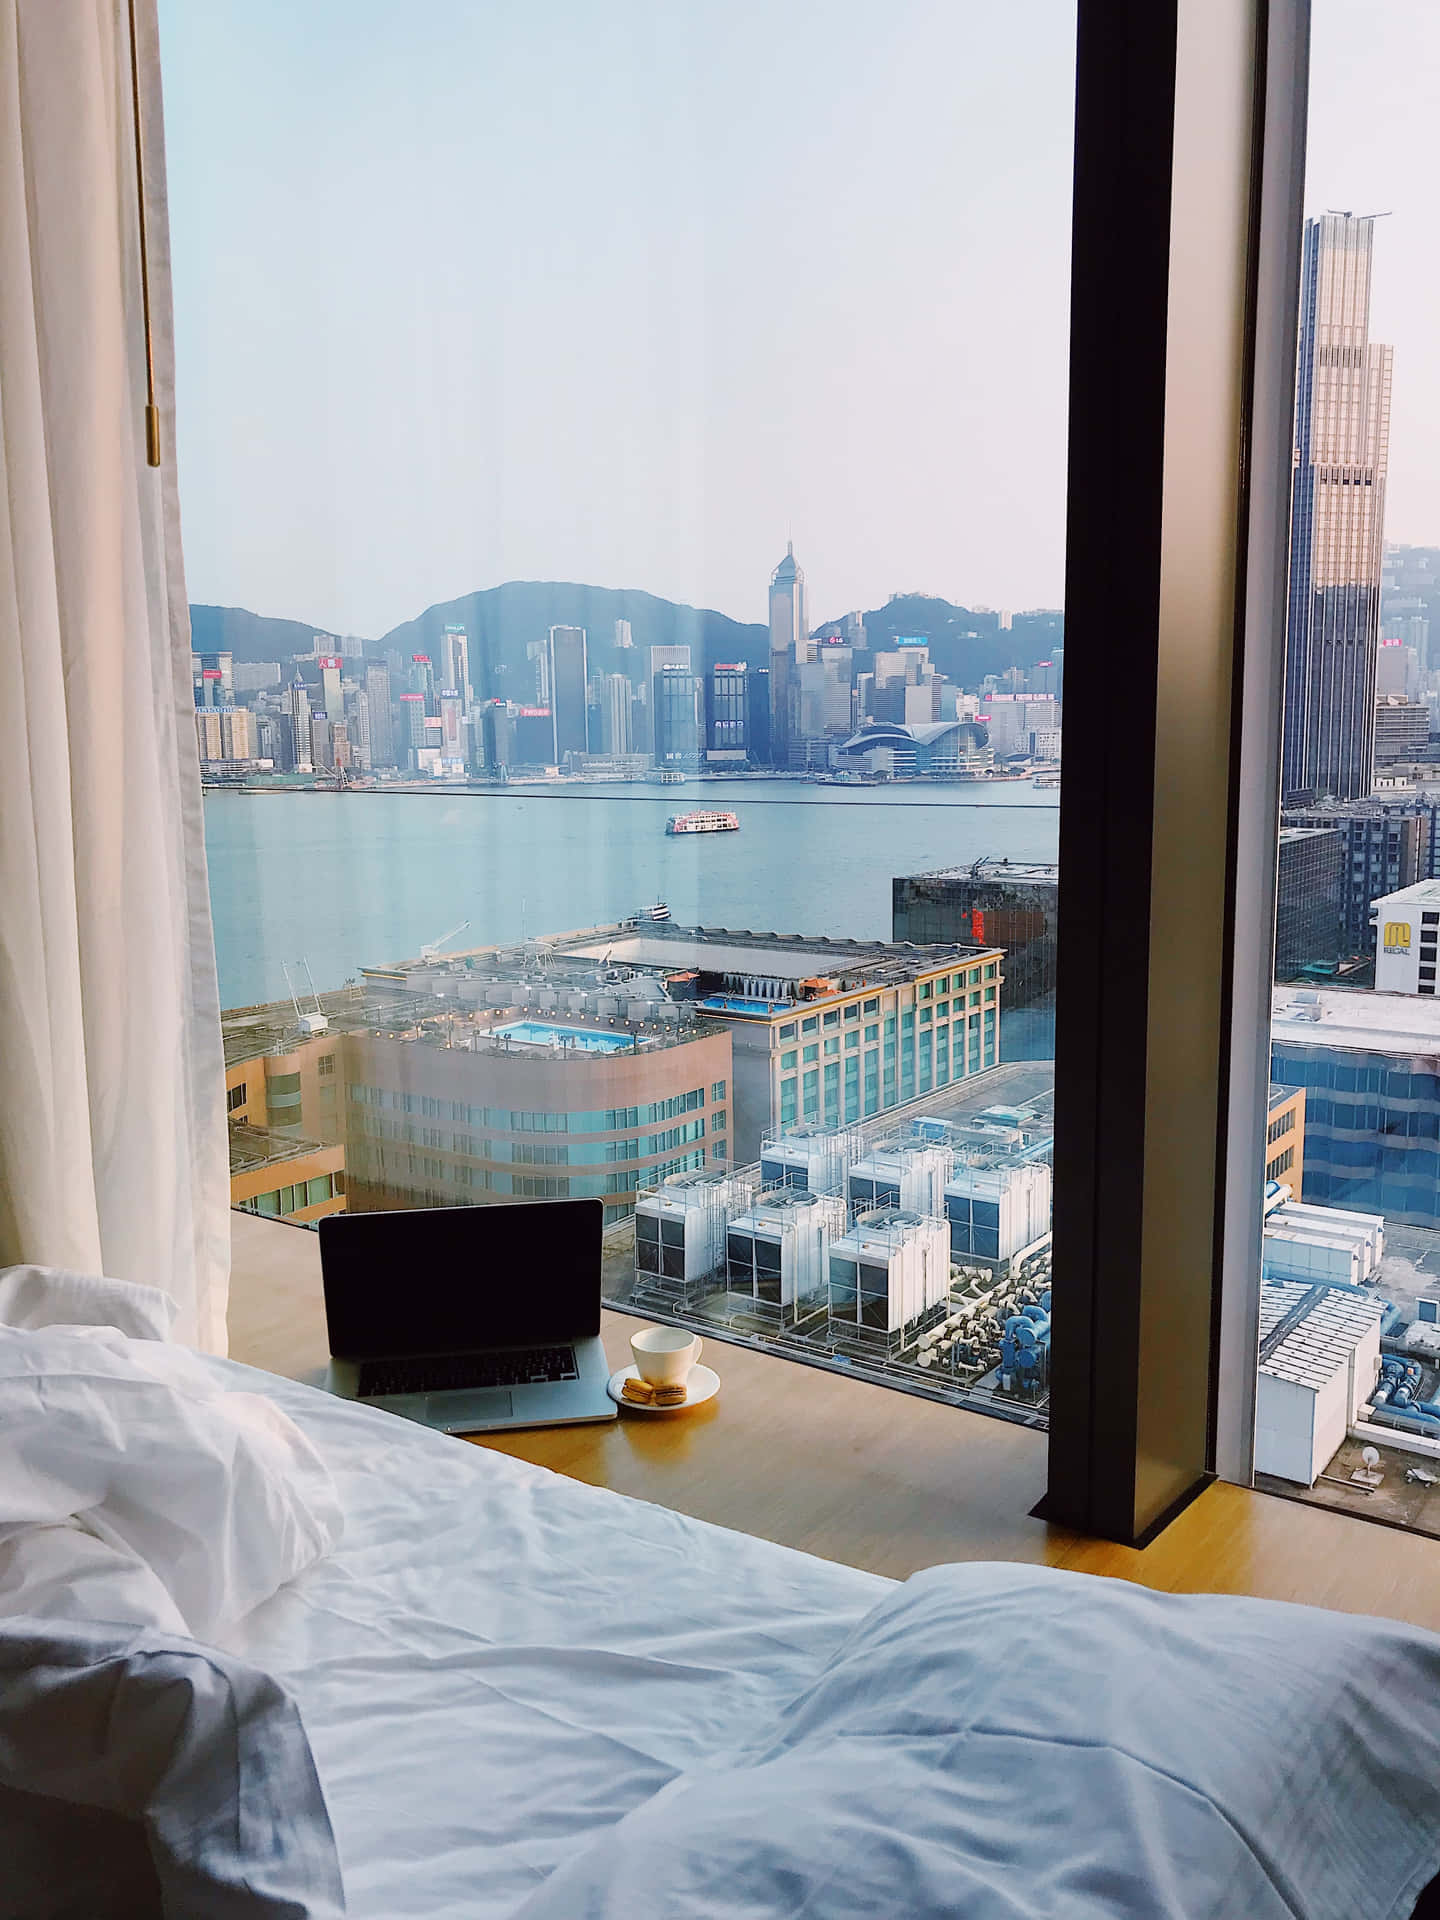 Luxurious Hotel Room Overlooking Urban Skyline Wallpaper